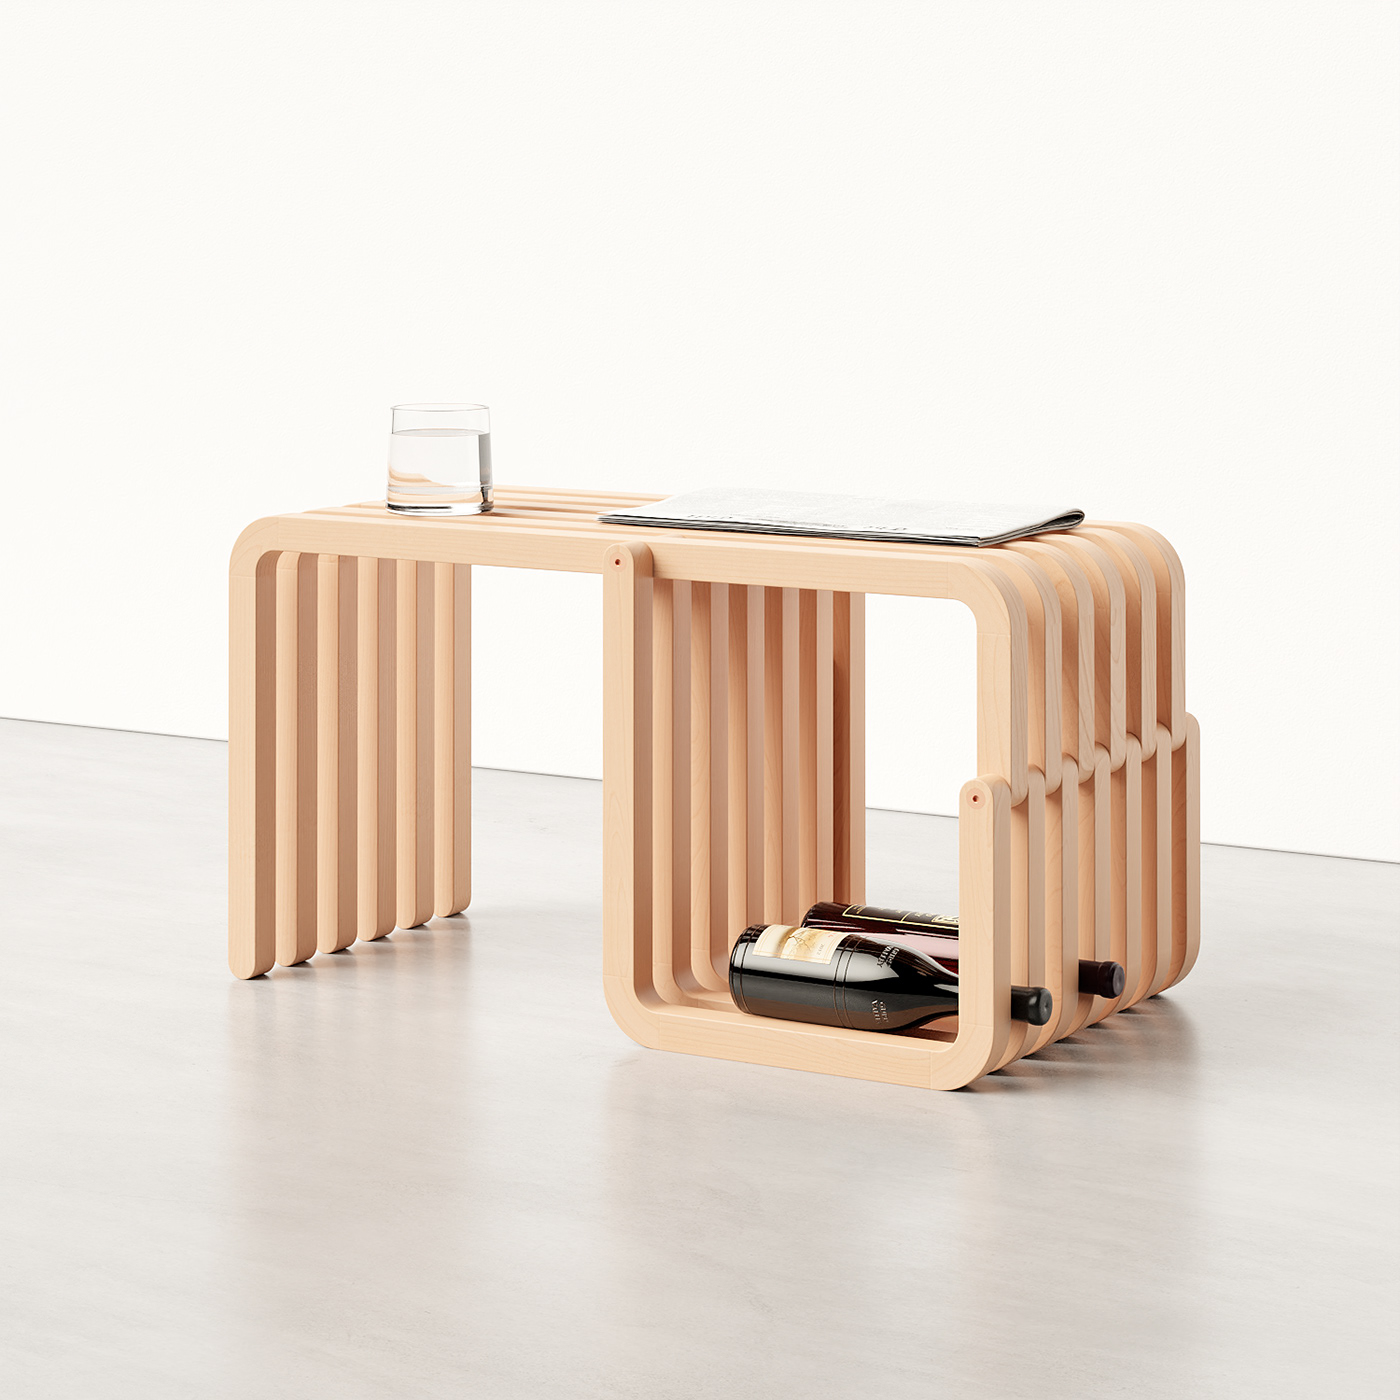 Functional Design minimal furniture modern furniture pragmatic design side table table wood furniture wood table